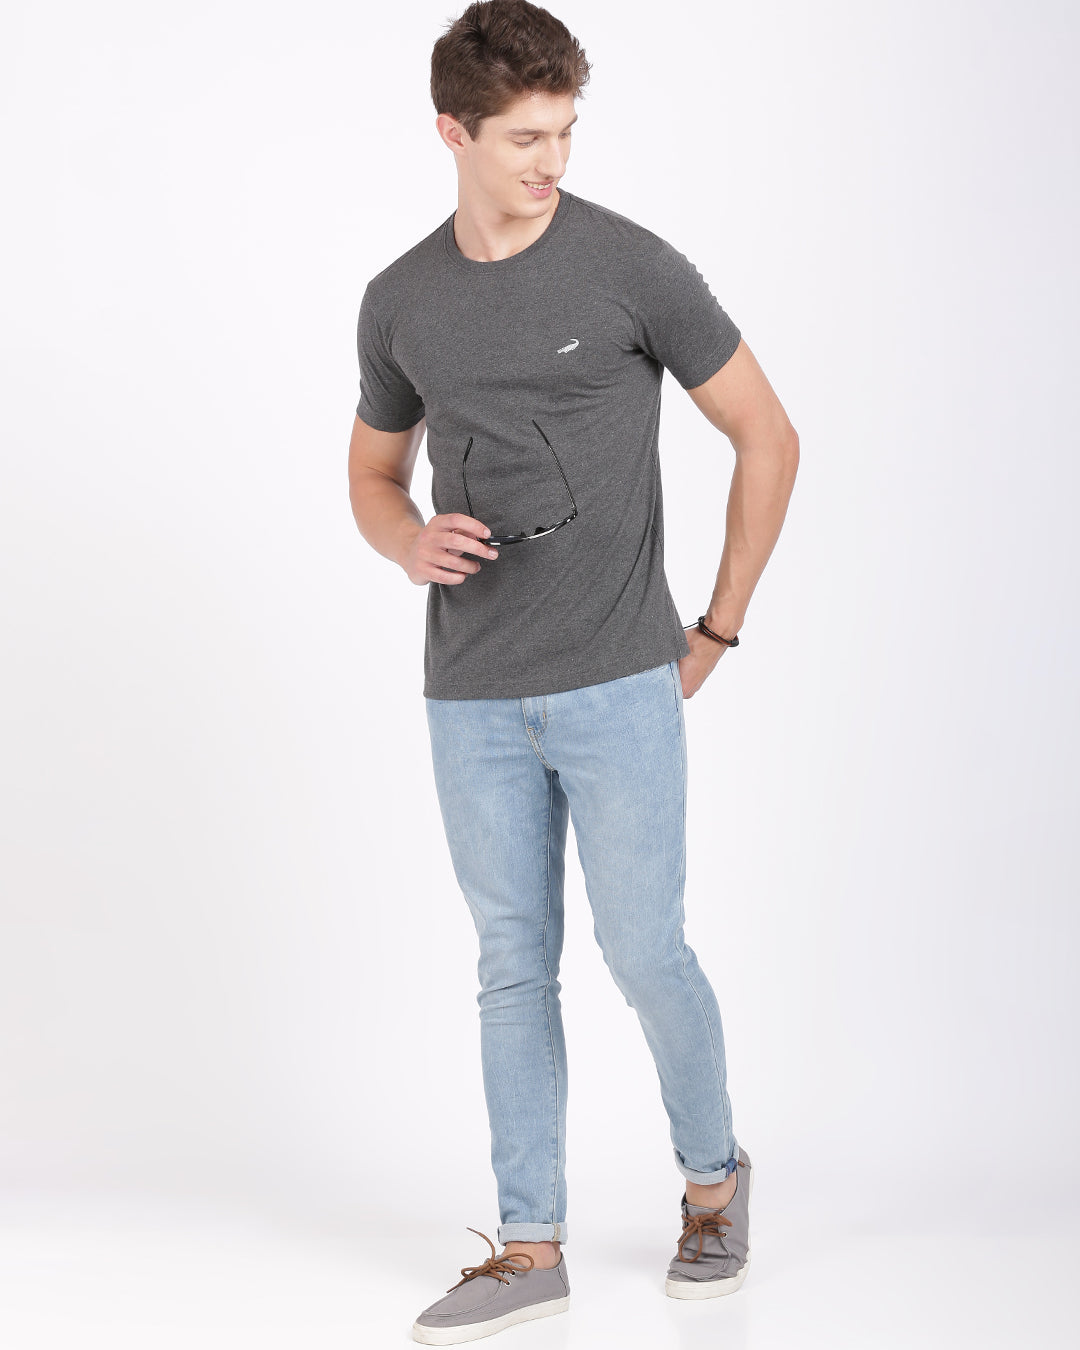 Men's Solid Round Neck Half Sleeve Cotton T-Shirt - CHARCOAL MELANGE